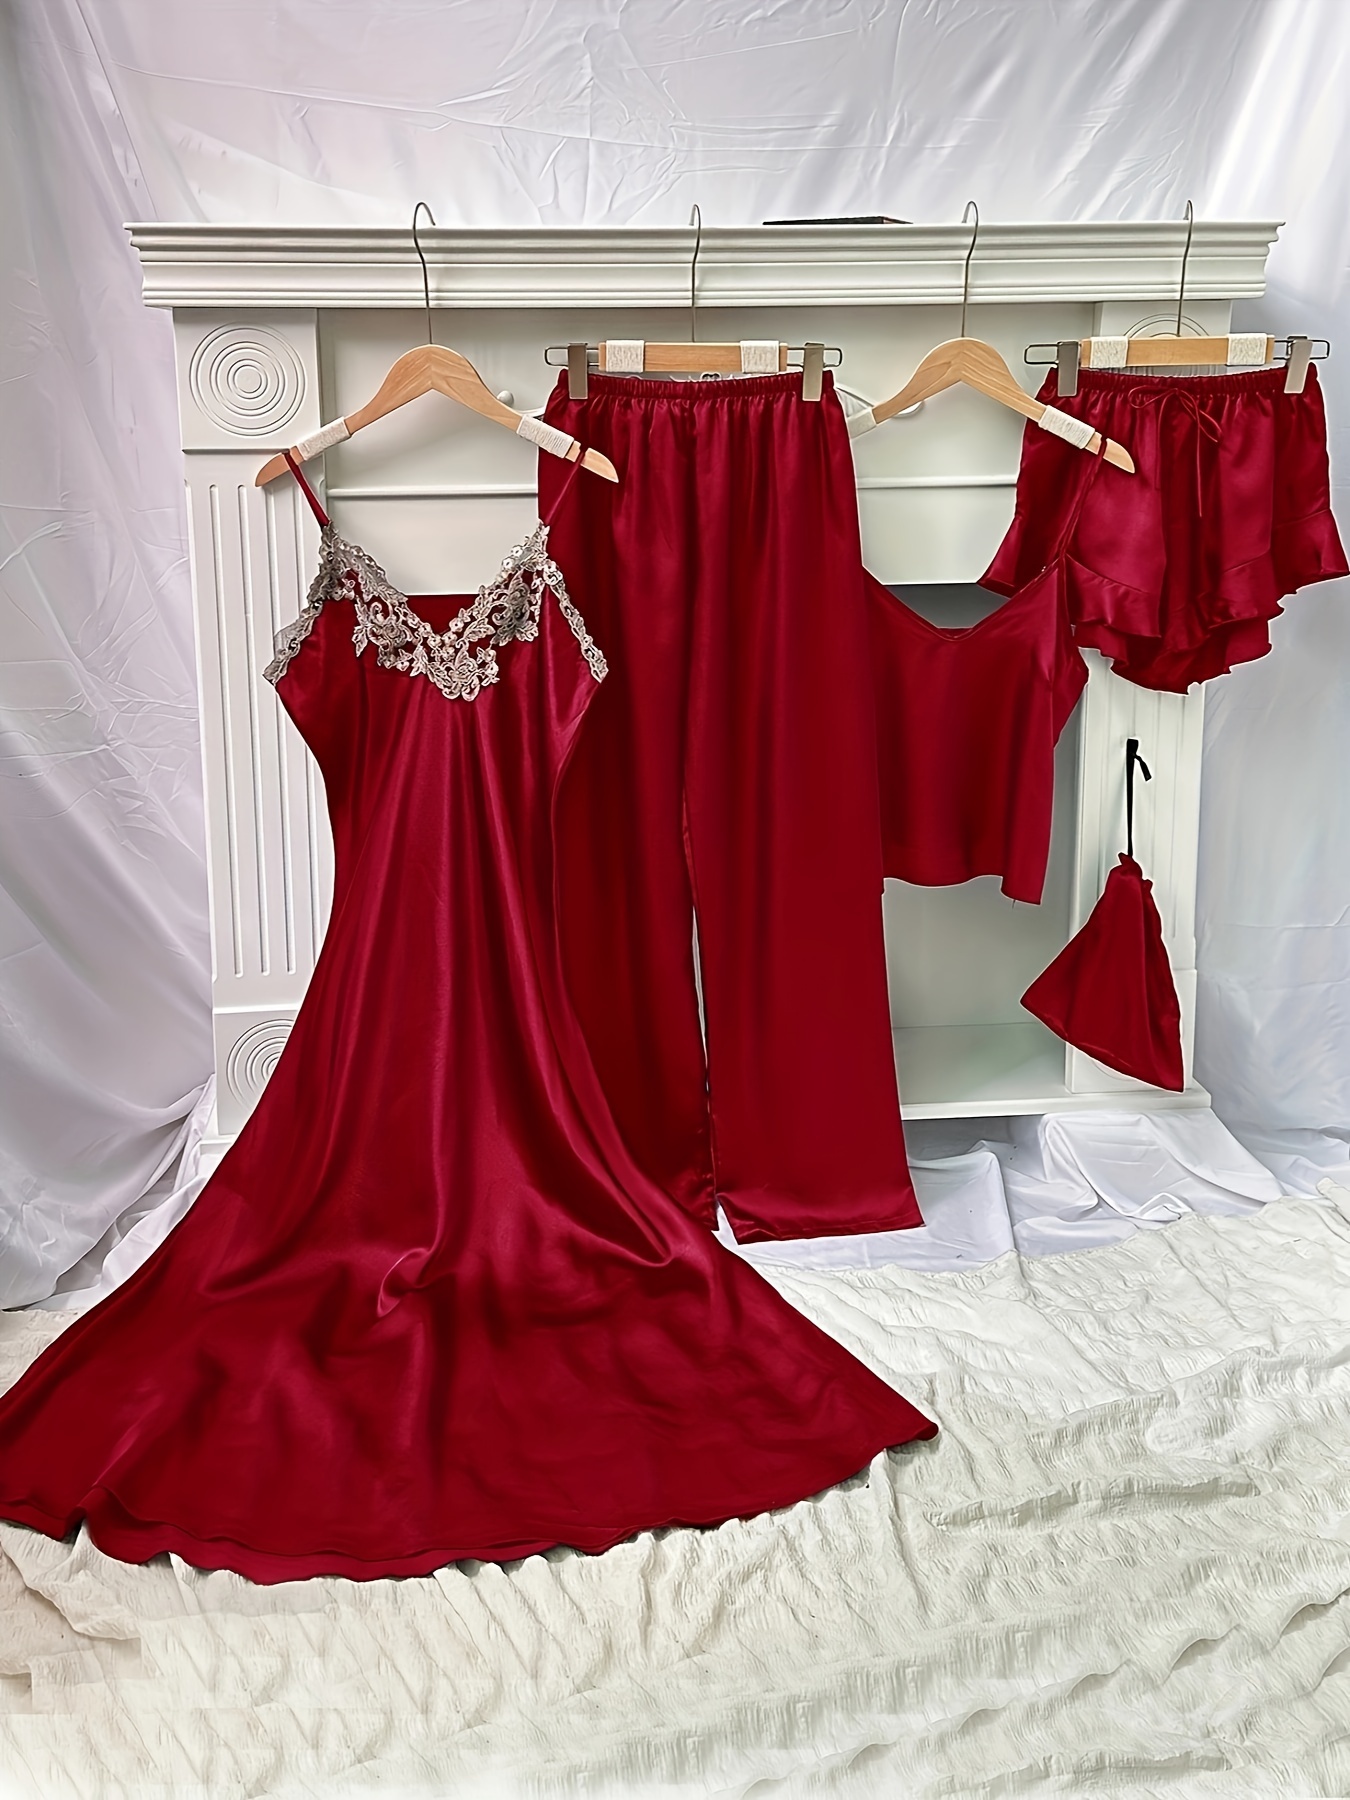 Unique Bargains Women's Satin Lace Pretty Trim Sleepwear Nightgown